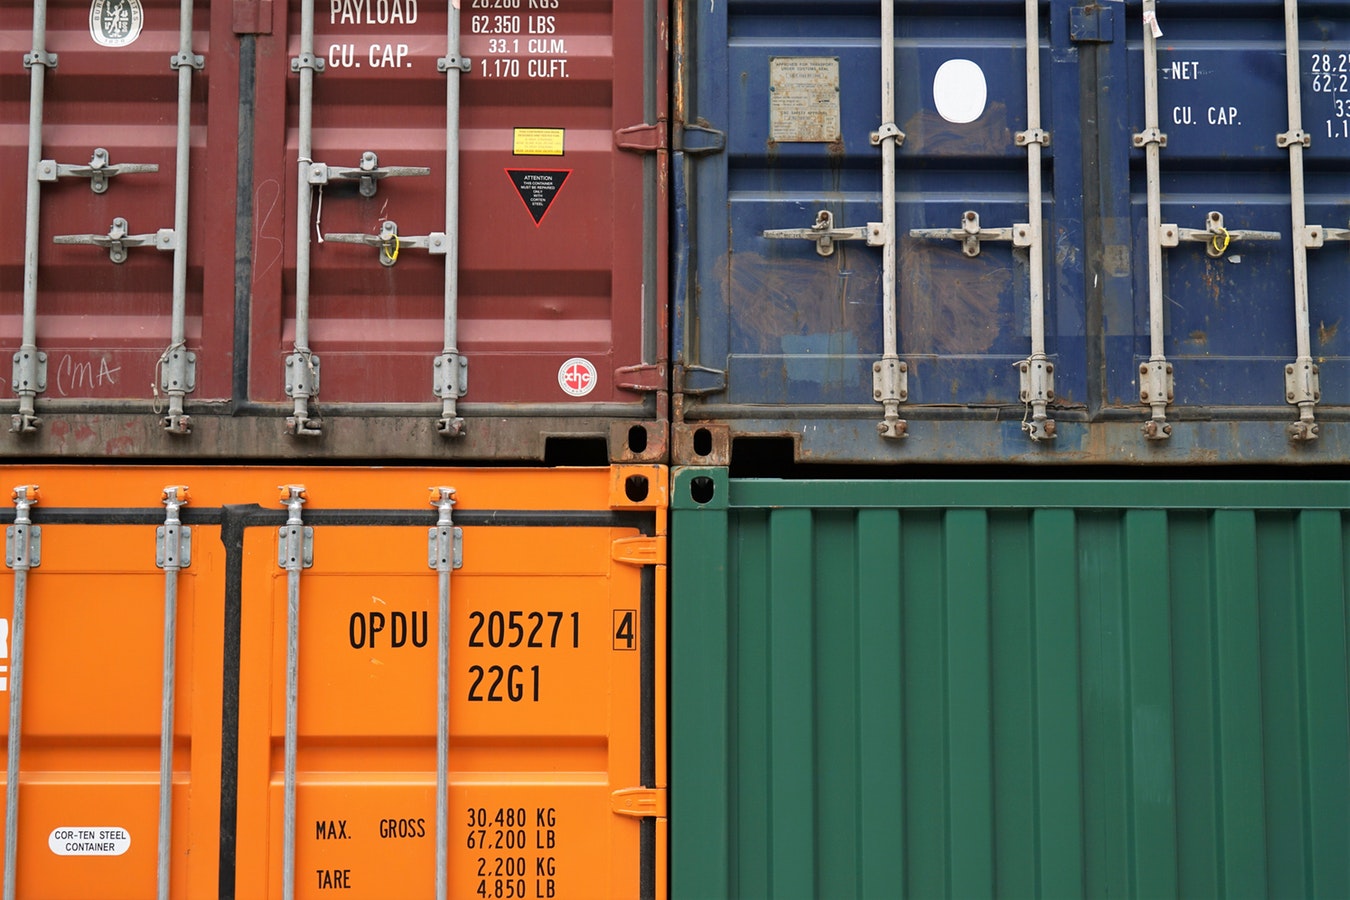 Shipping Container Restuarants, Pop-Up Restaurants